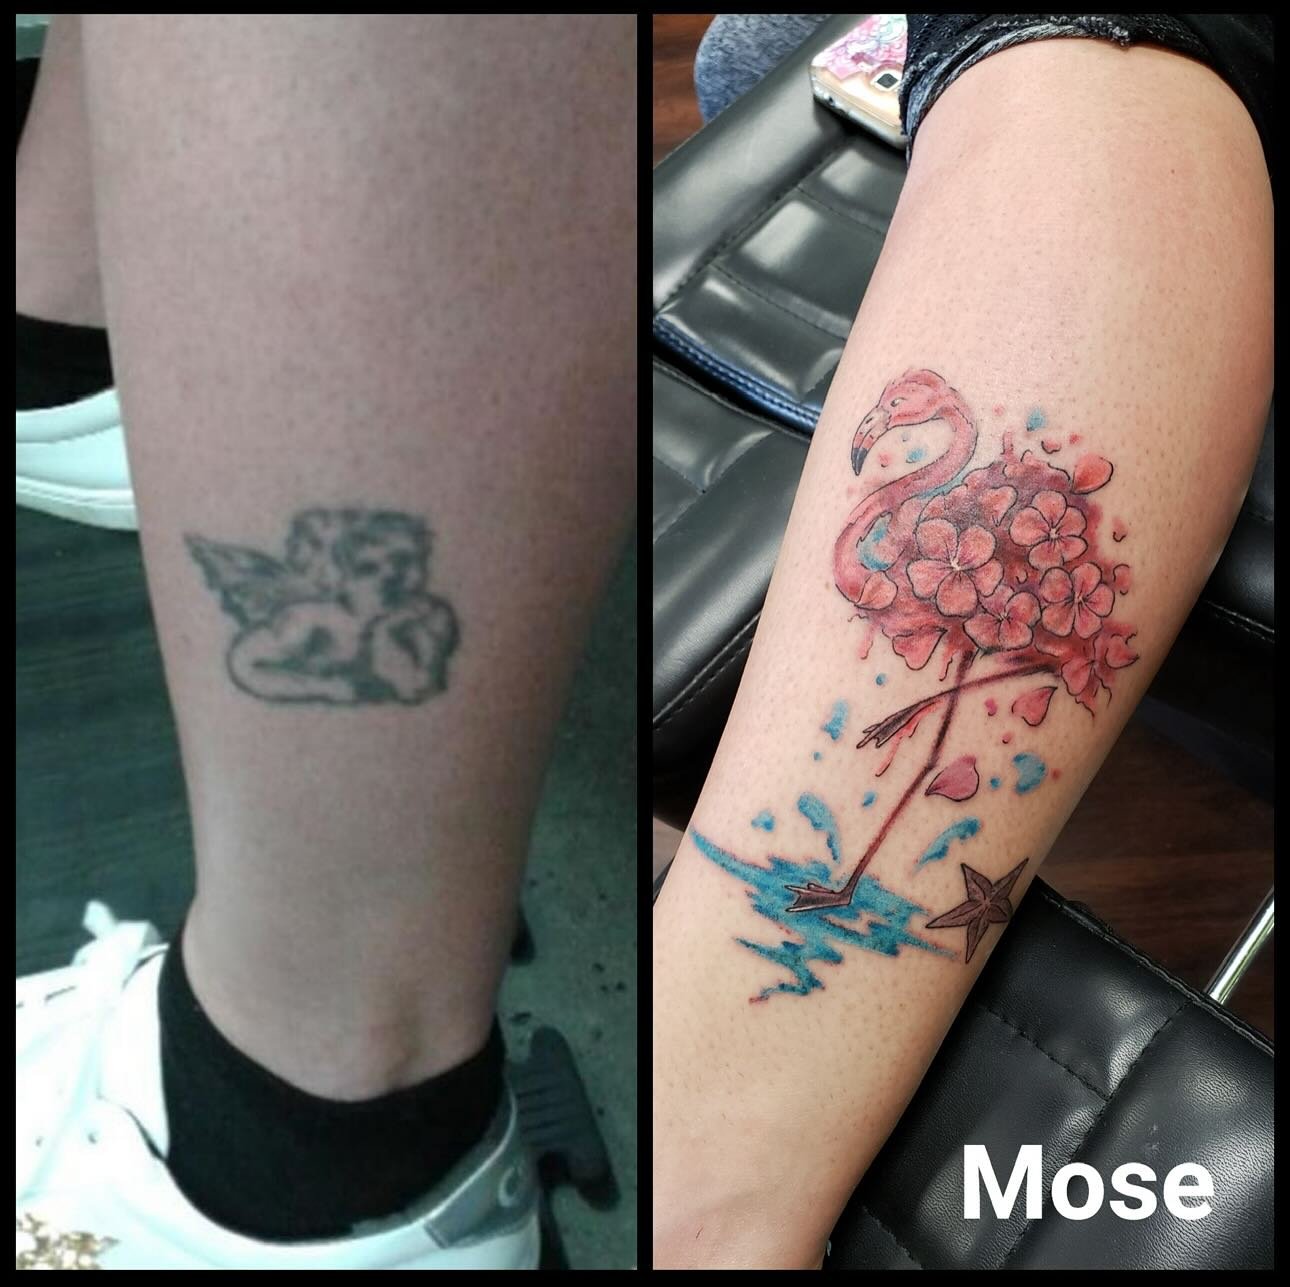 Before and after #tattoo #tattooartist #lasvegas #lasvegastattooartist #criticaltattoosupply #dynamiccolor #girlswithtattoos #tattooart #tattoos #tattoolife #tattooedgirls #guyswithtattoos #inked #tattooed #bodyart #art #eternalink #tattooist #tattoo